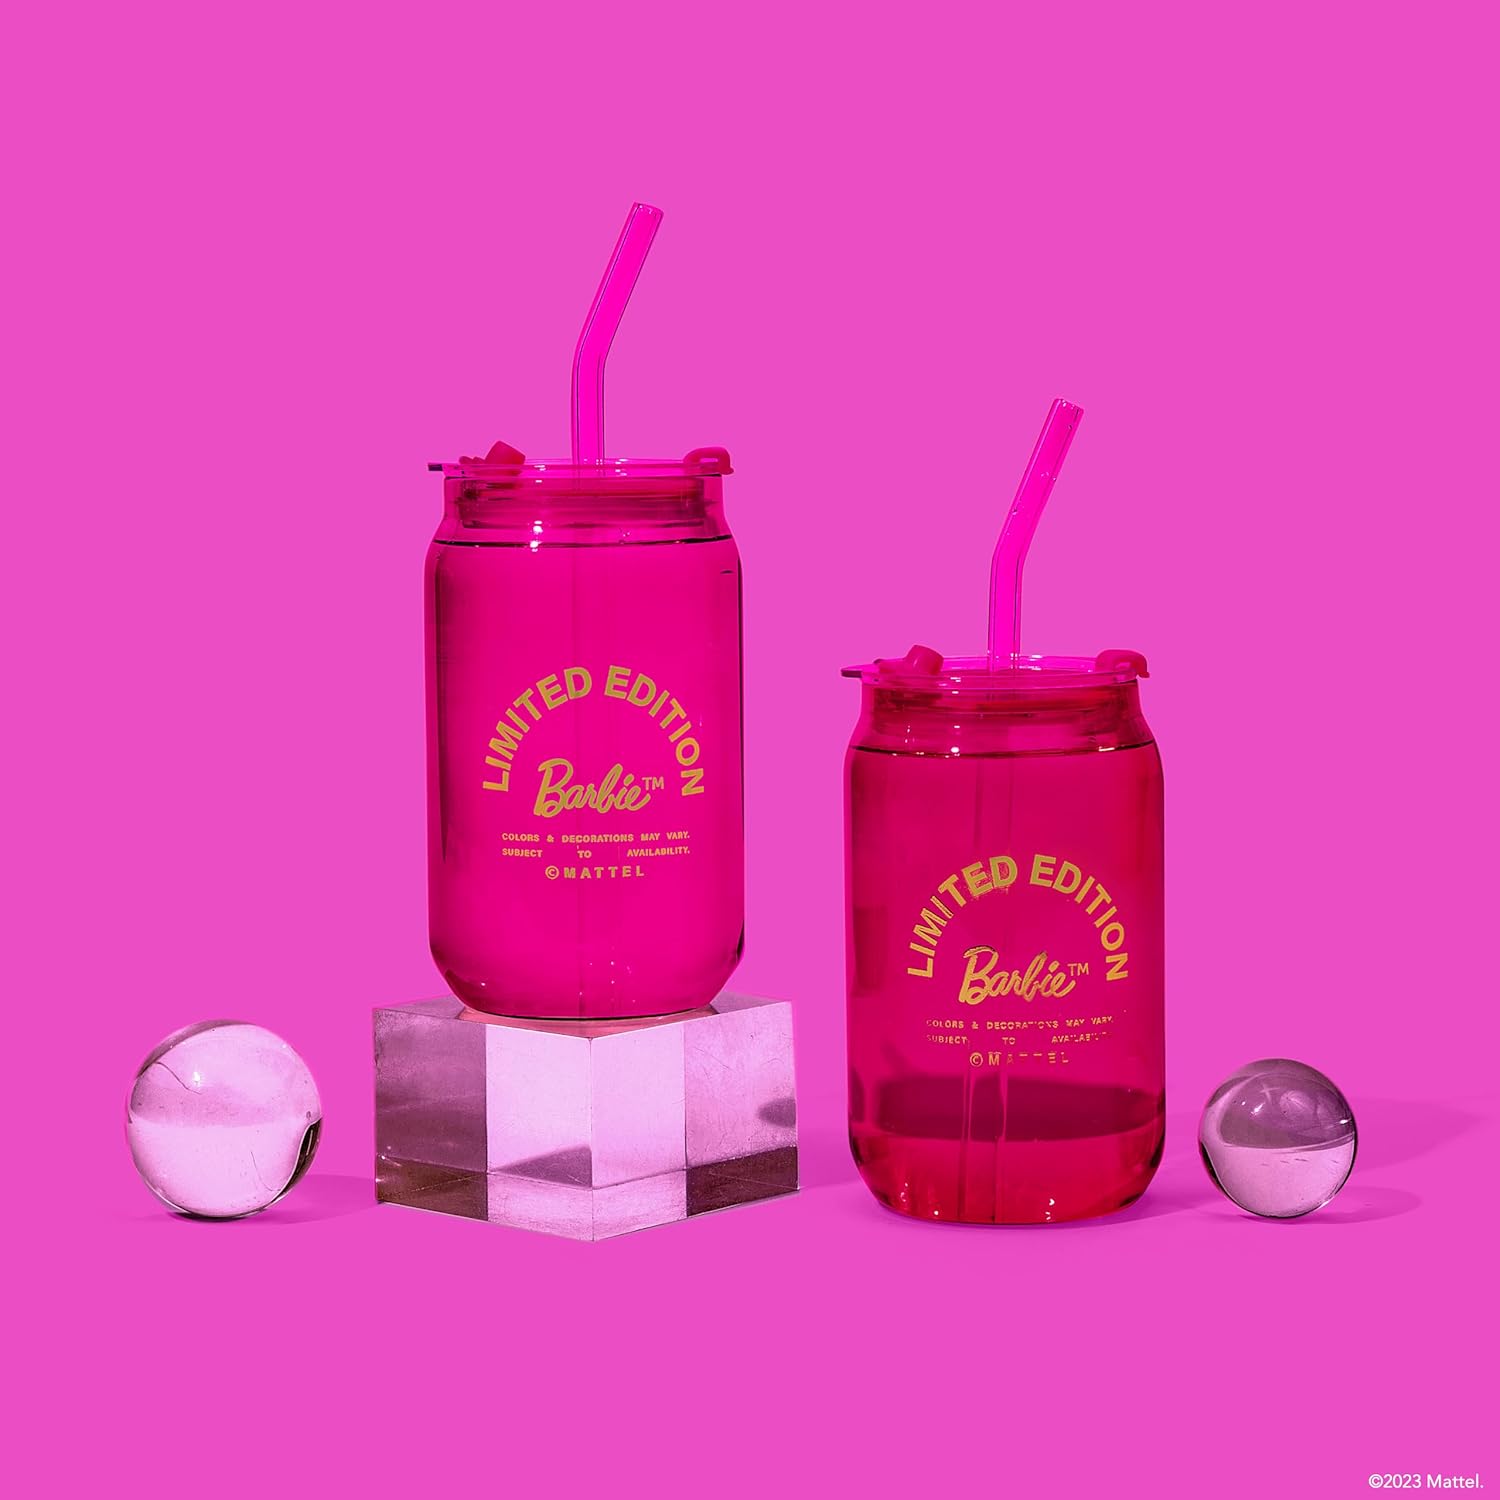 Barbie x Dragon Glassware Martini Glasses, Pink and Magenta